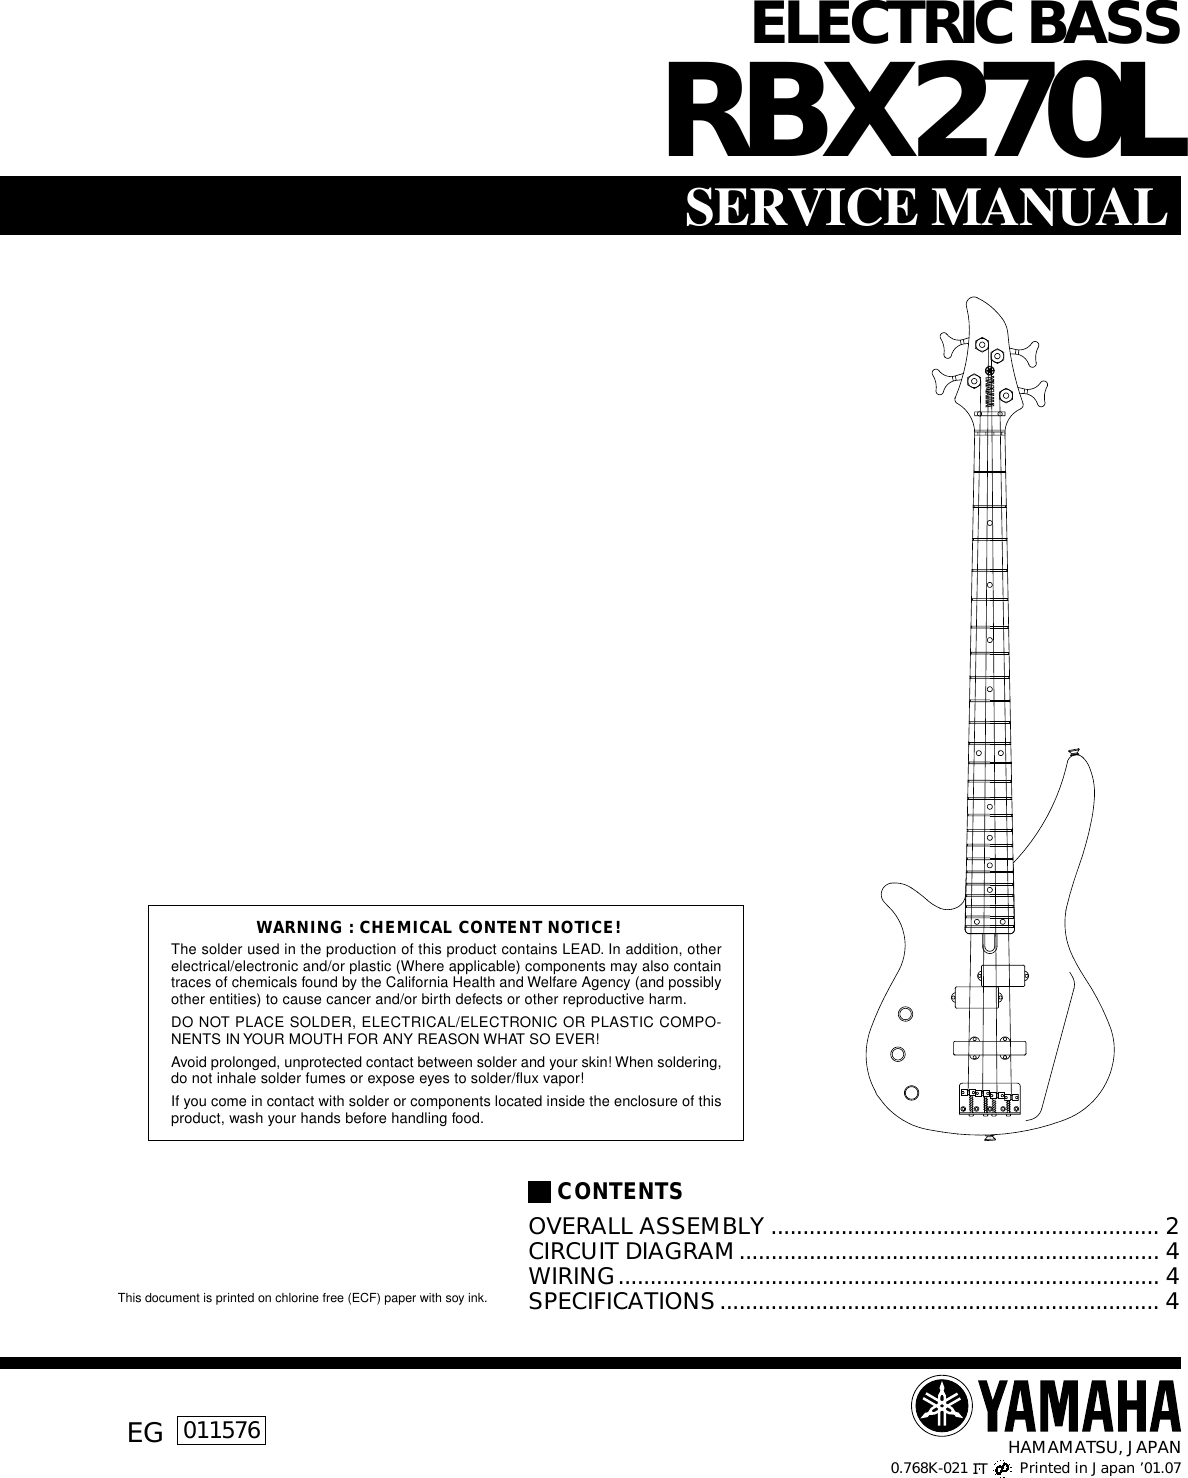 Page 1 of 4 - Yamaha Guitar-Electric-Bass-Users-Manual ELECTRIC BASS  Yamaha-guitar-electric-bass-users-manual